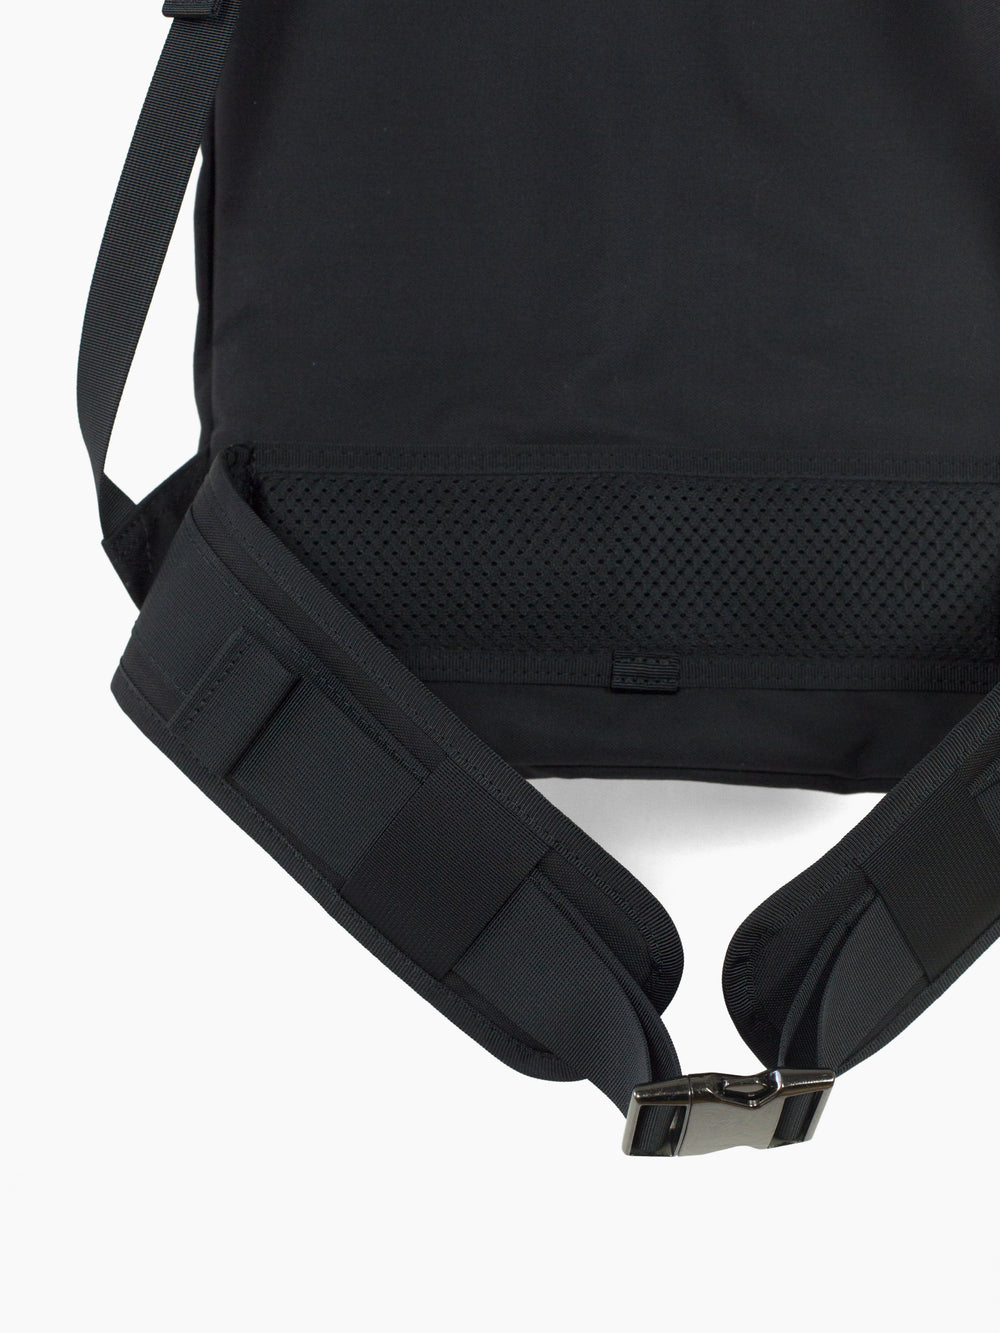 Soshiotsuki AW22 Inner Harness Laptop Backpack